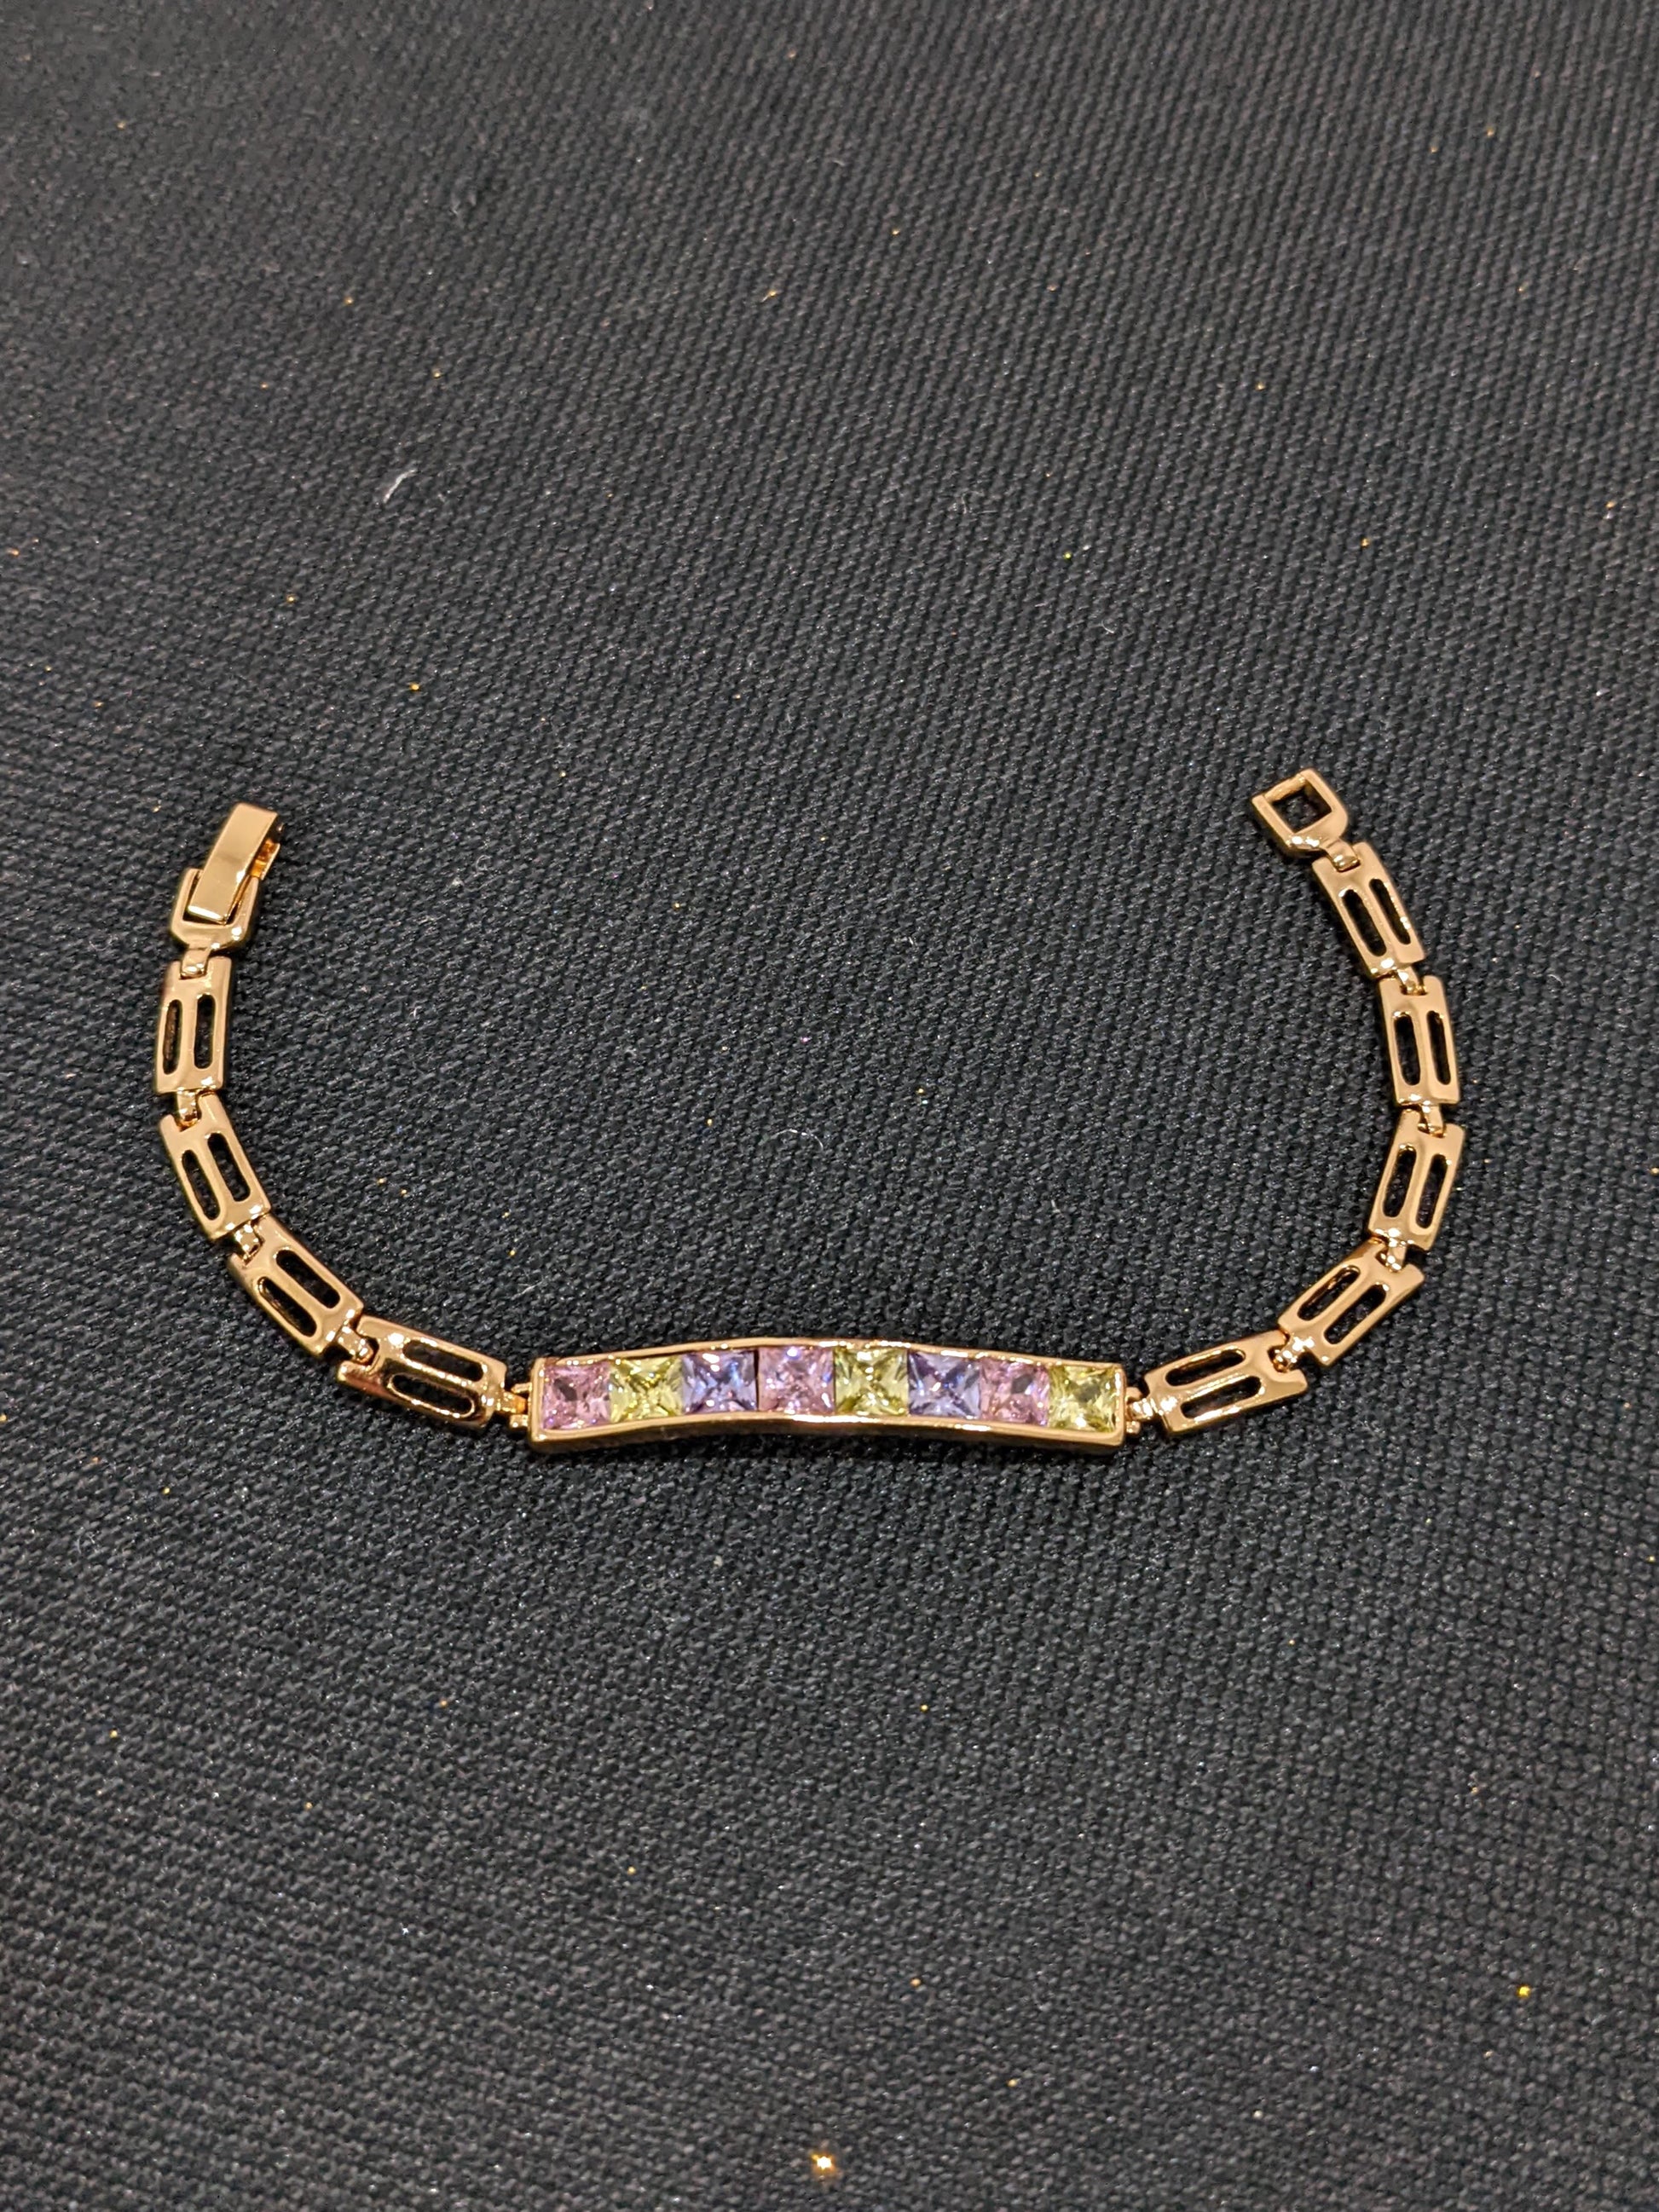 Multi color Cz stone gold finish Bracelet - Simpliful